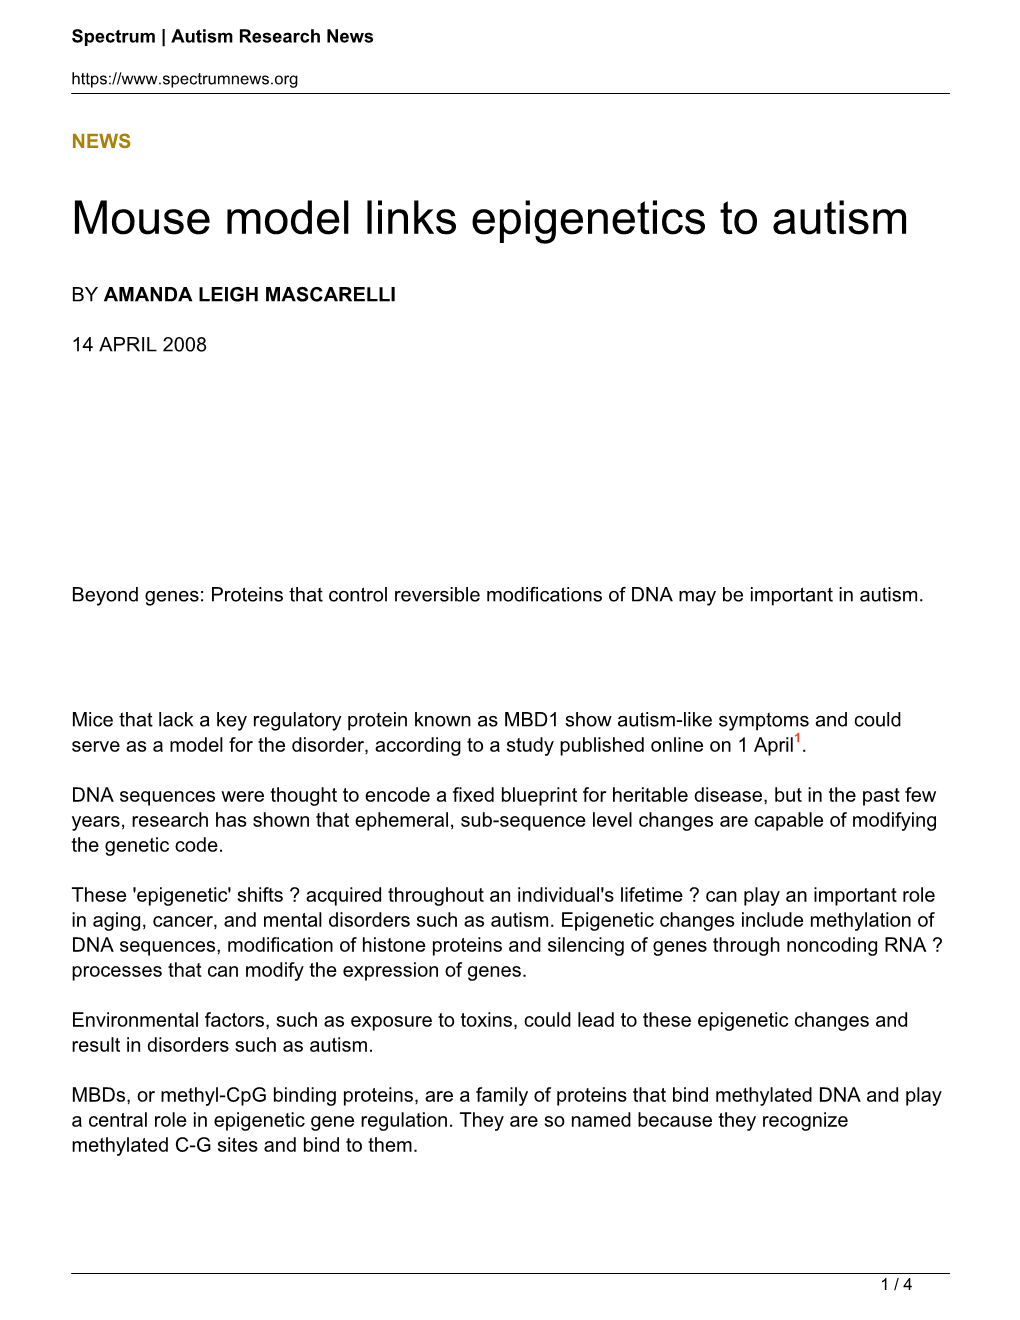 Mouse Model Links Epigenetics to Autism